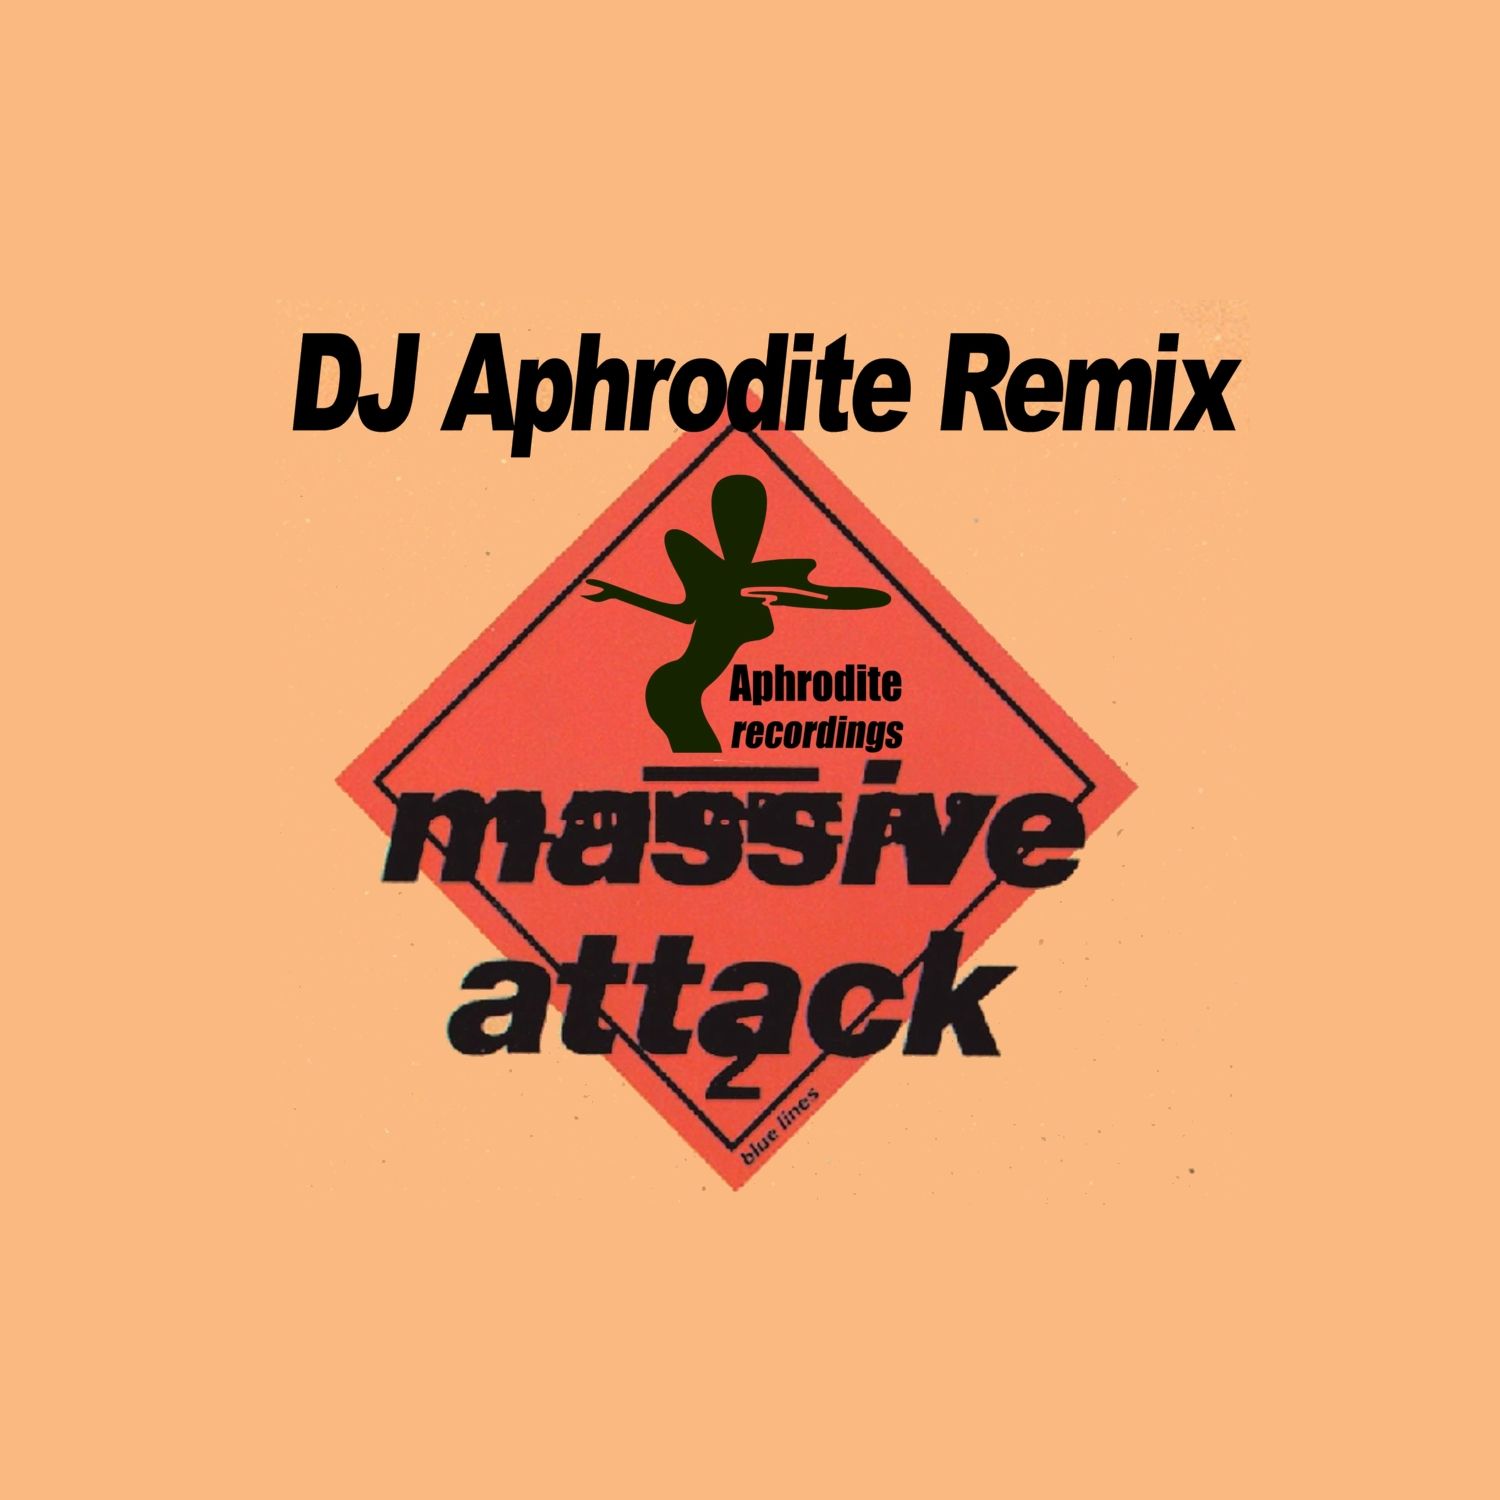 Aphrodite remixes Massive Attack